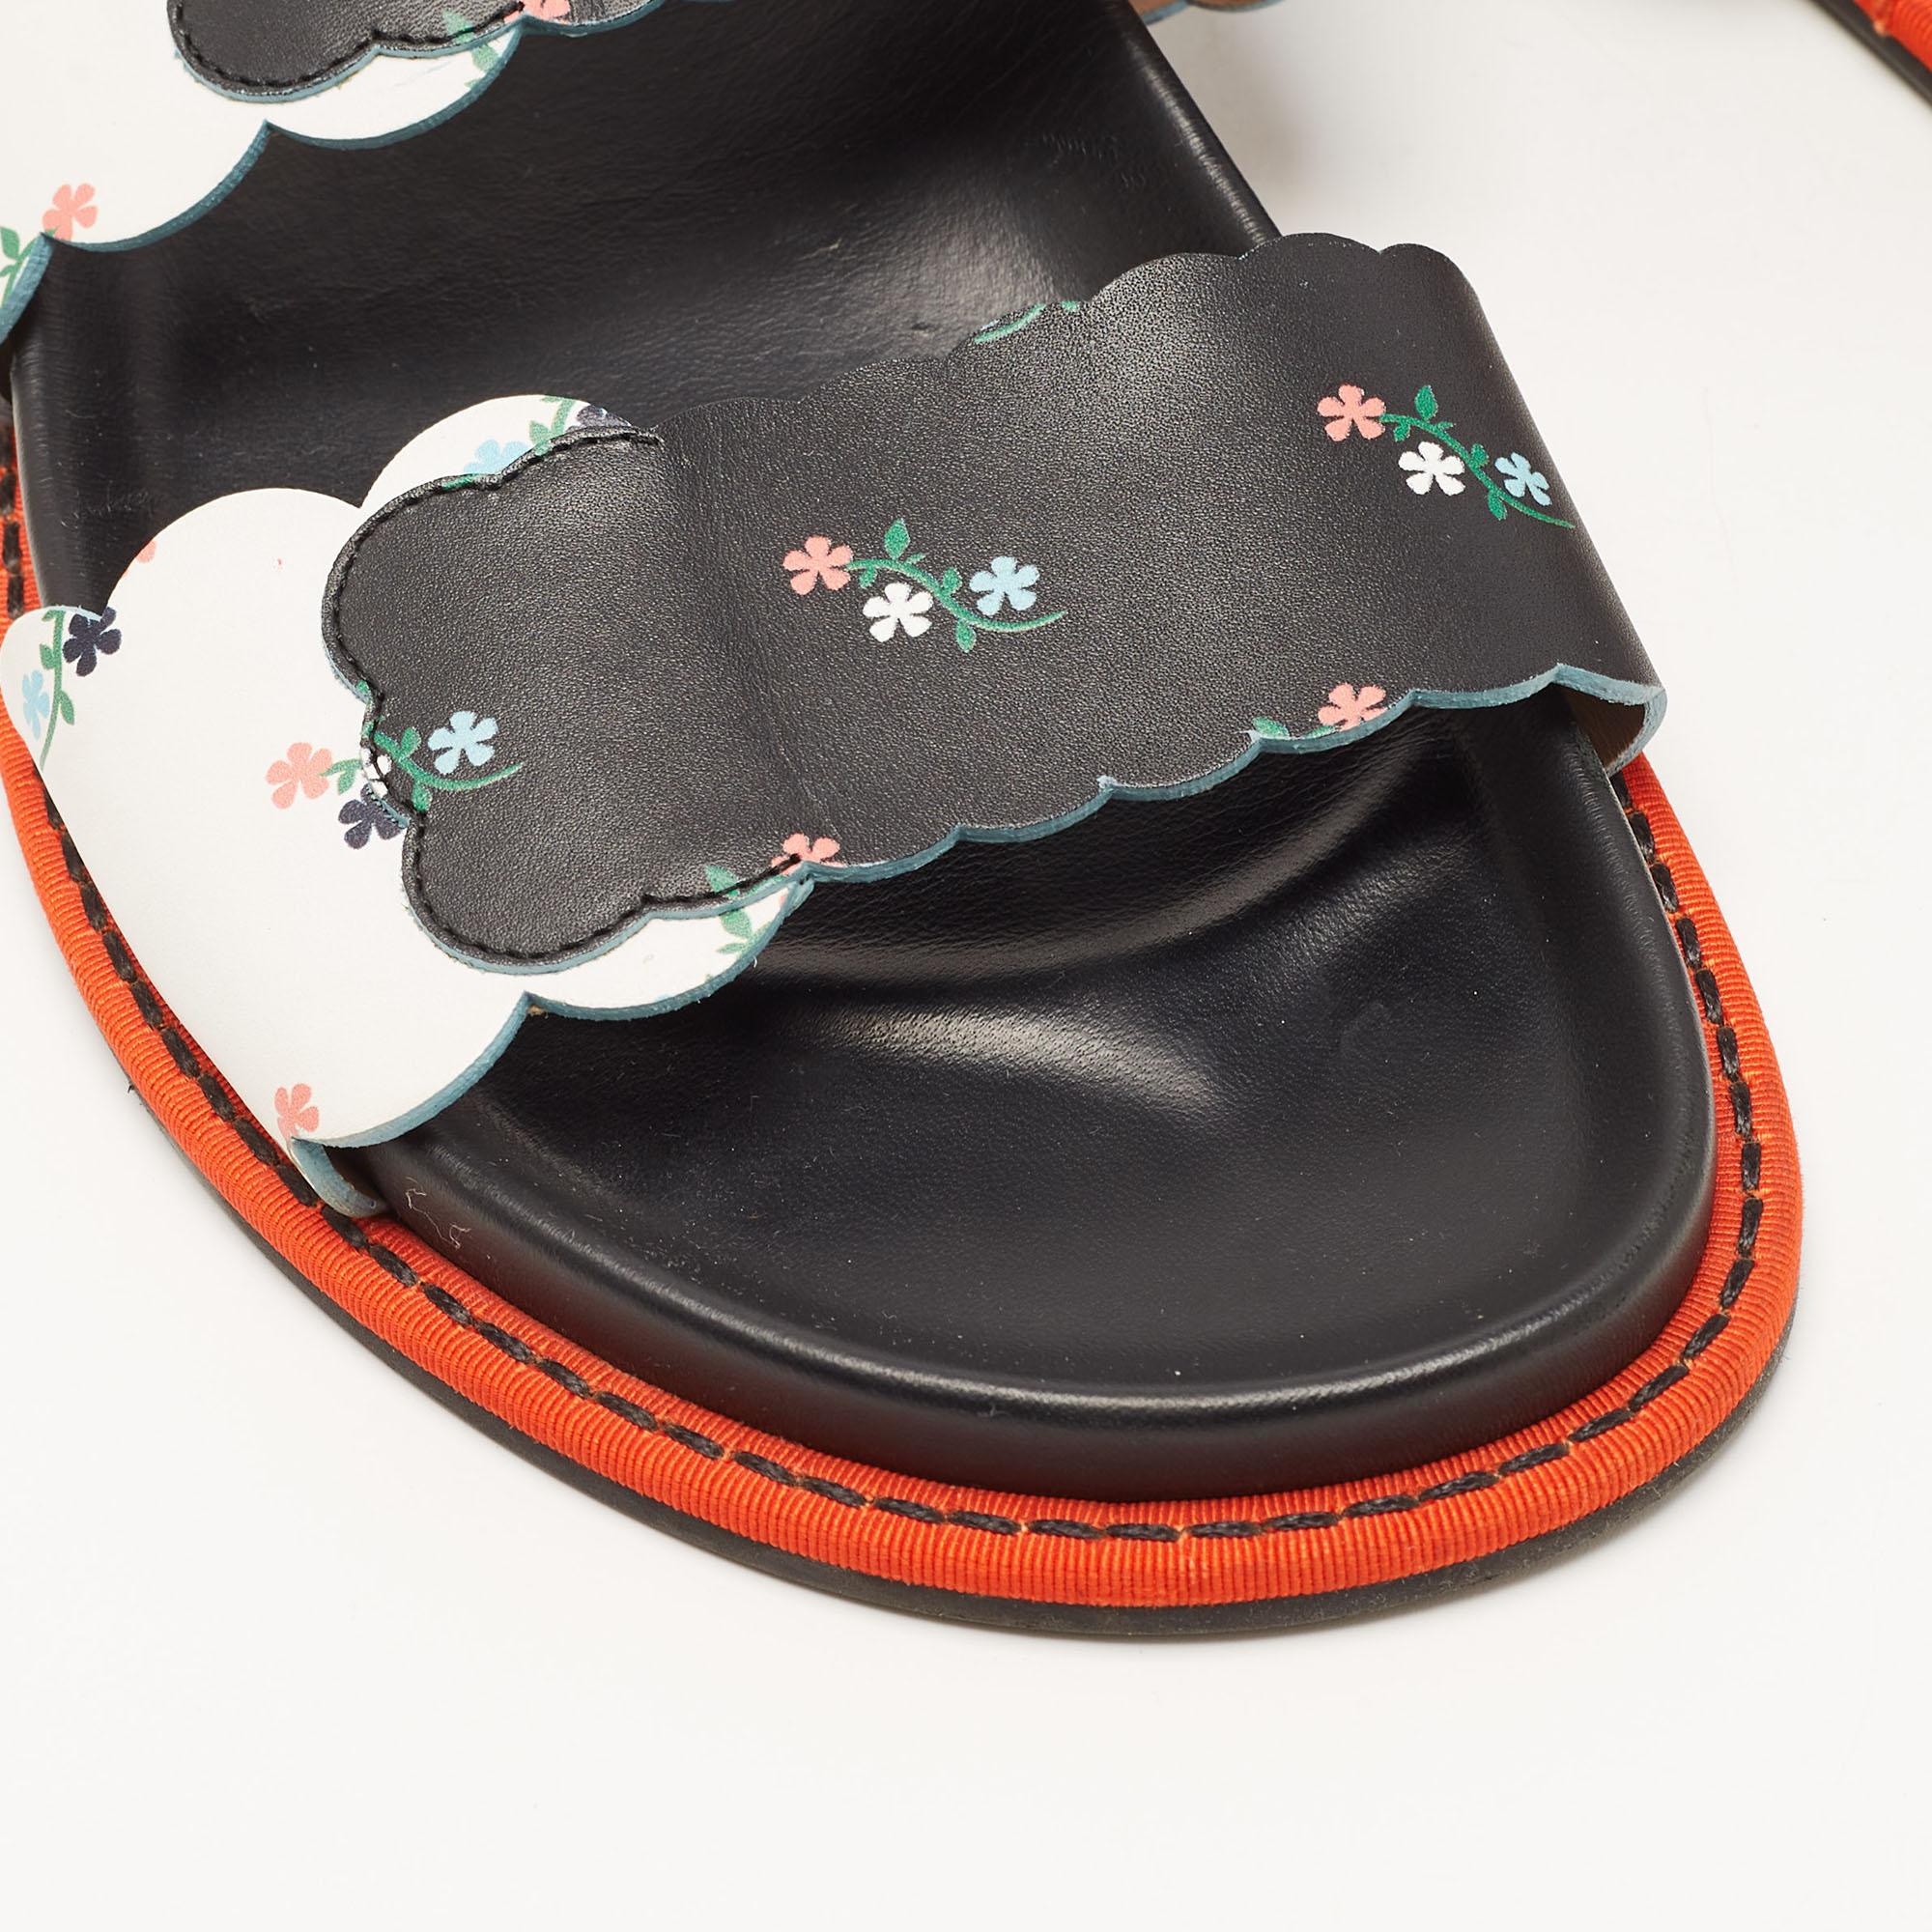 Fendi Multicolor Floral Print Leather Strap Slide Sandals Size 38 For Sale 3